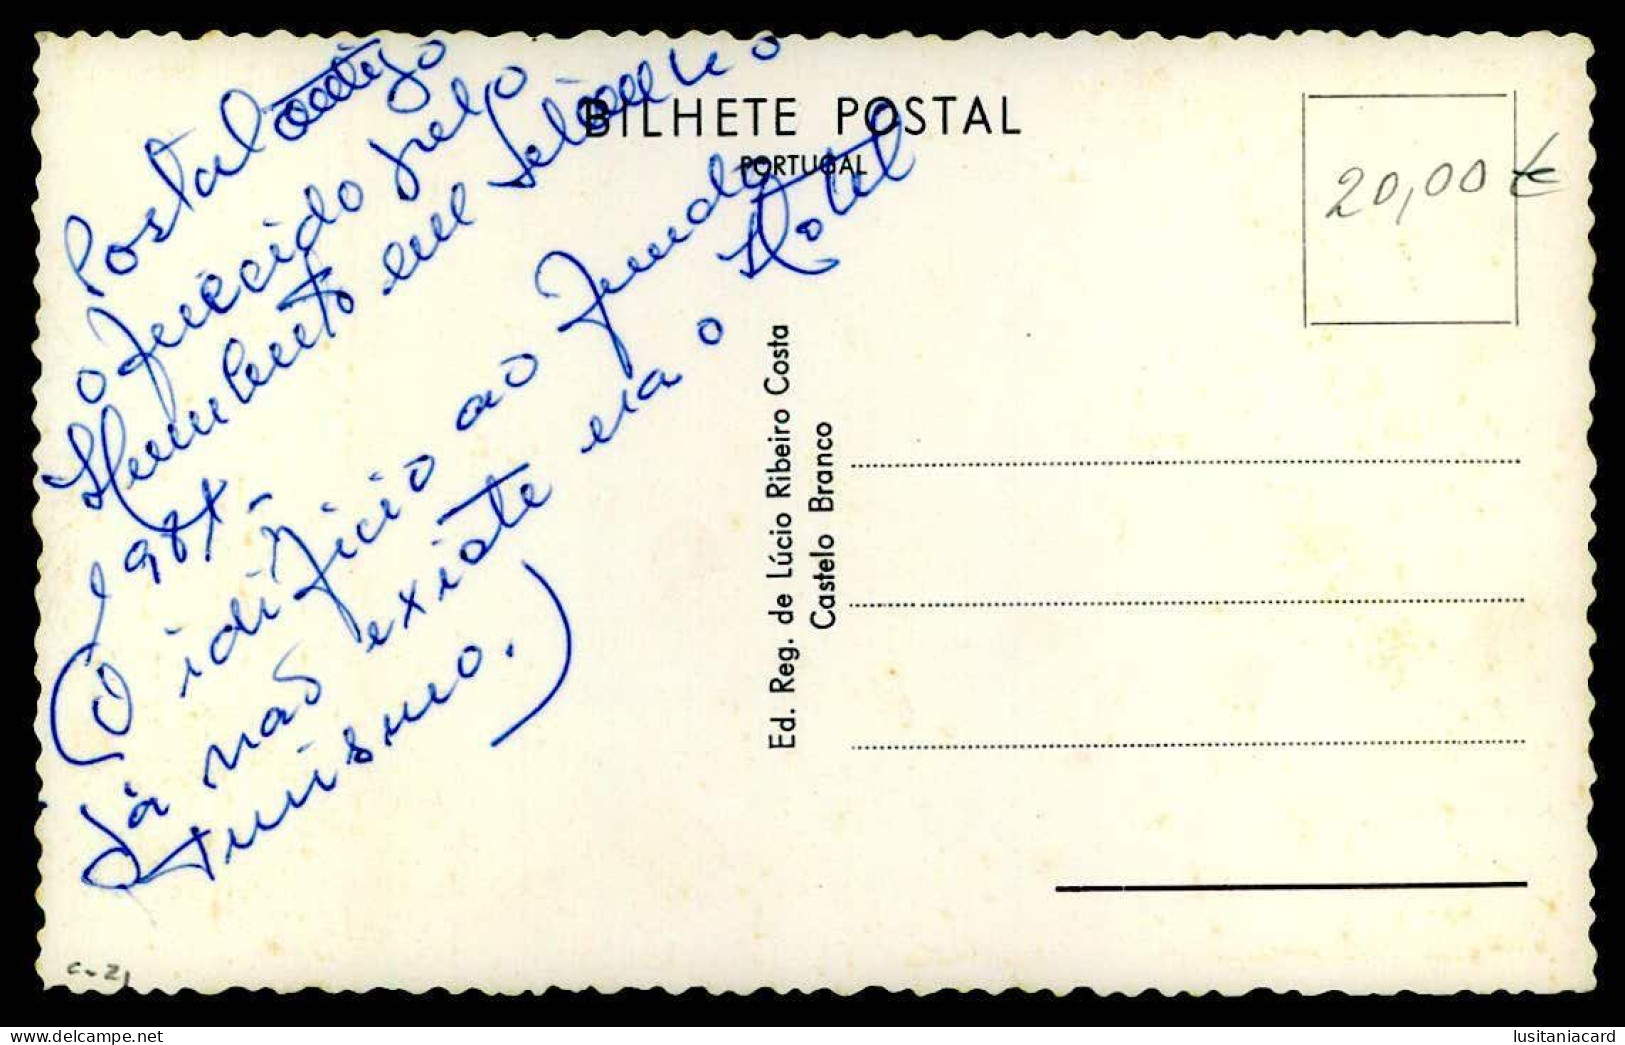 CASTELO BRANCO - Rua Do Presidente Sidonio Pais.( Ed. Reg. De Lúcio Ribeiro Costa Nº 16) Carte Postale - Castelo Branco